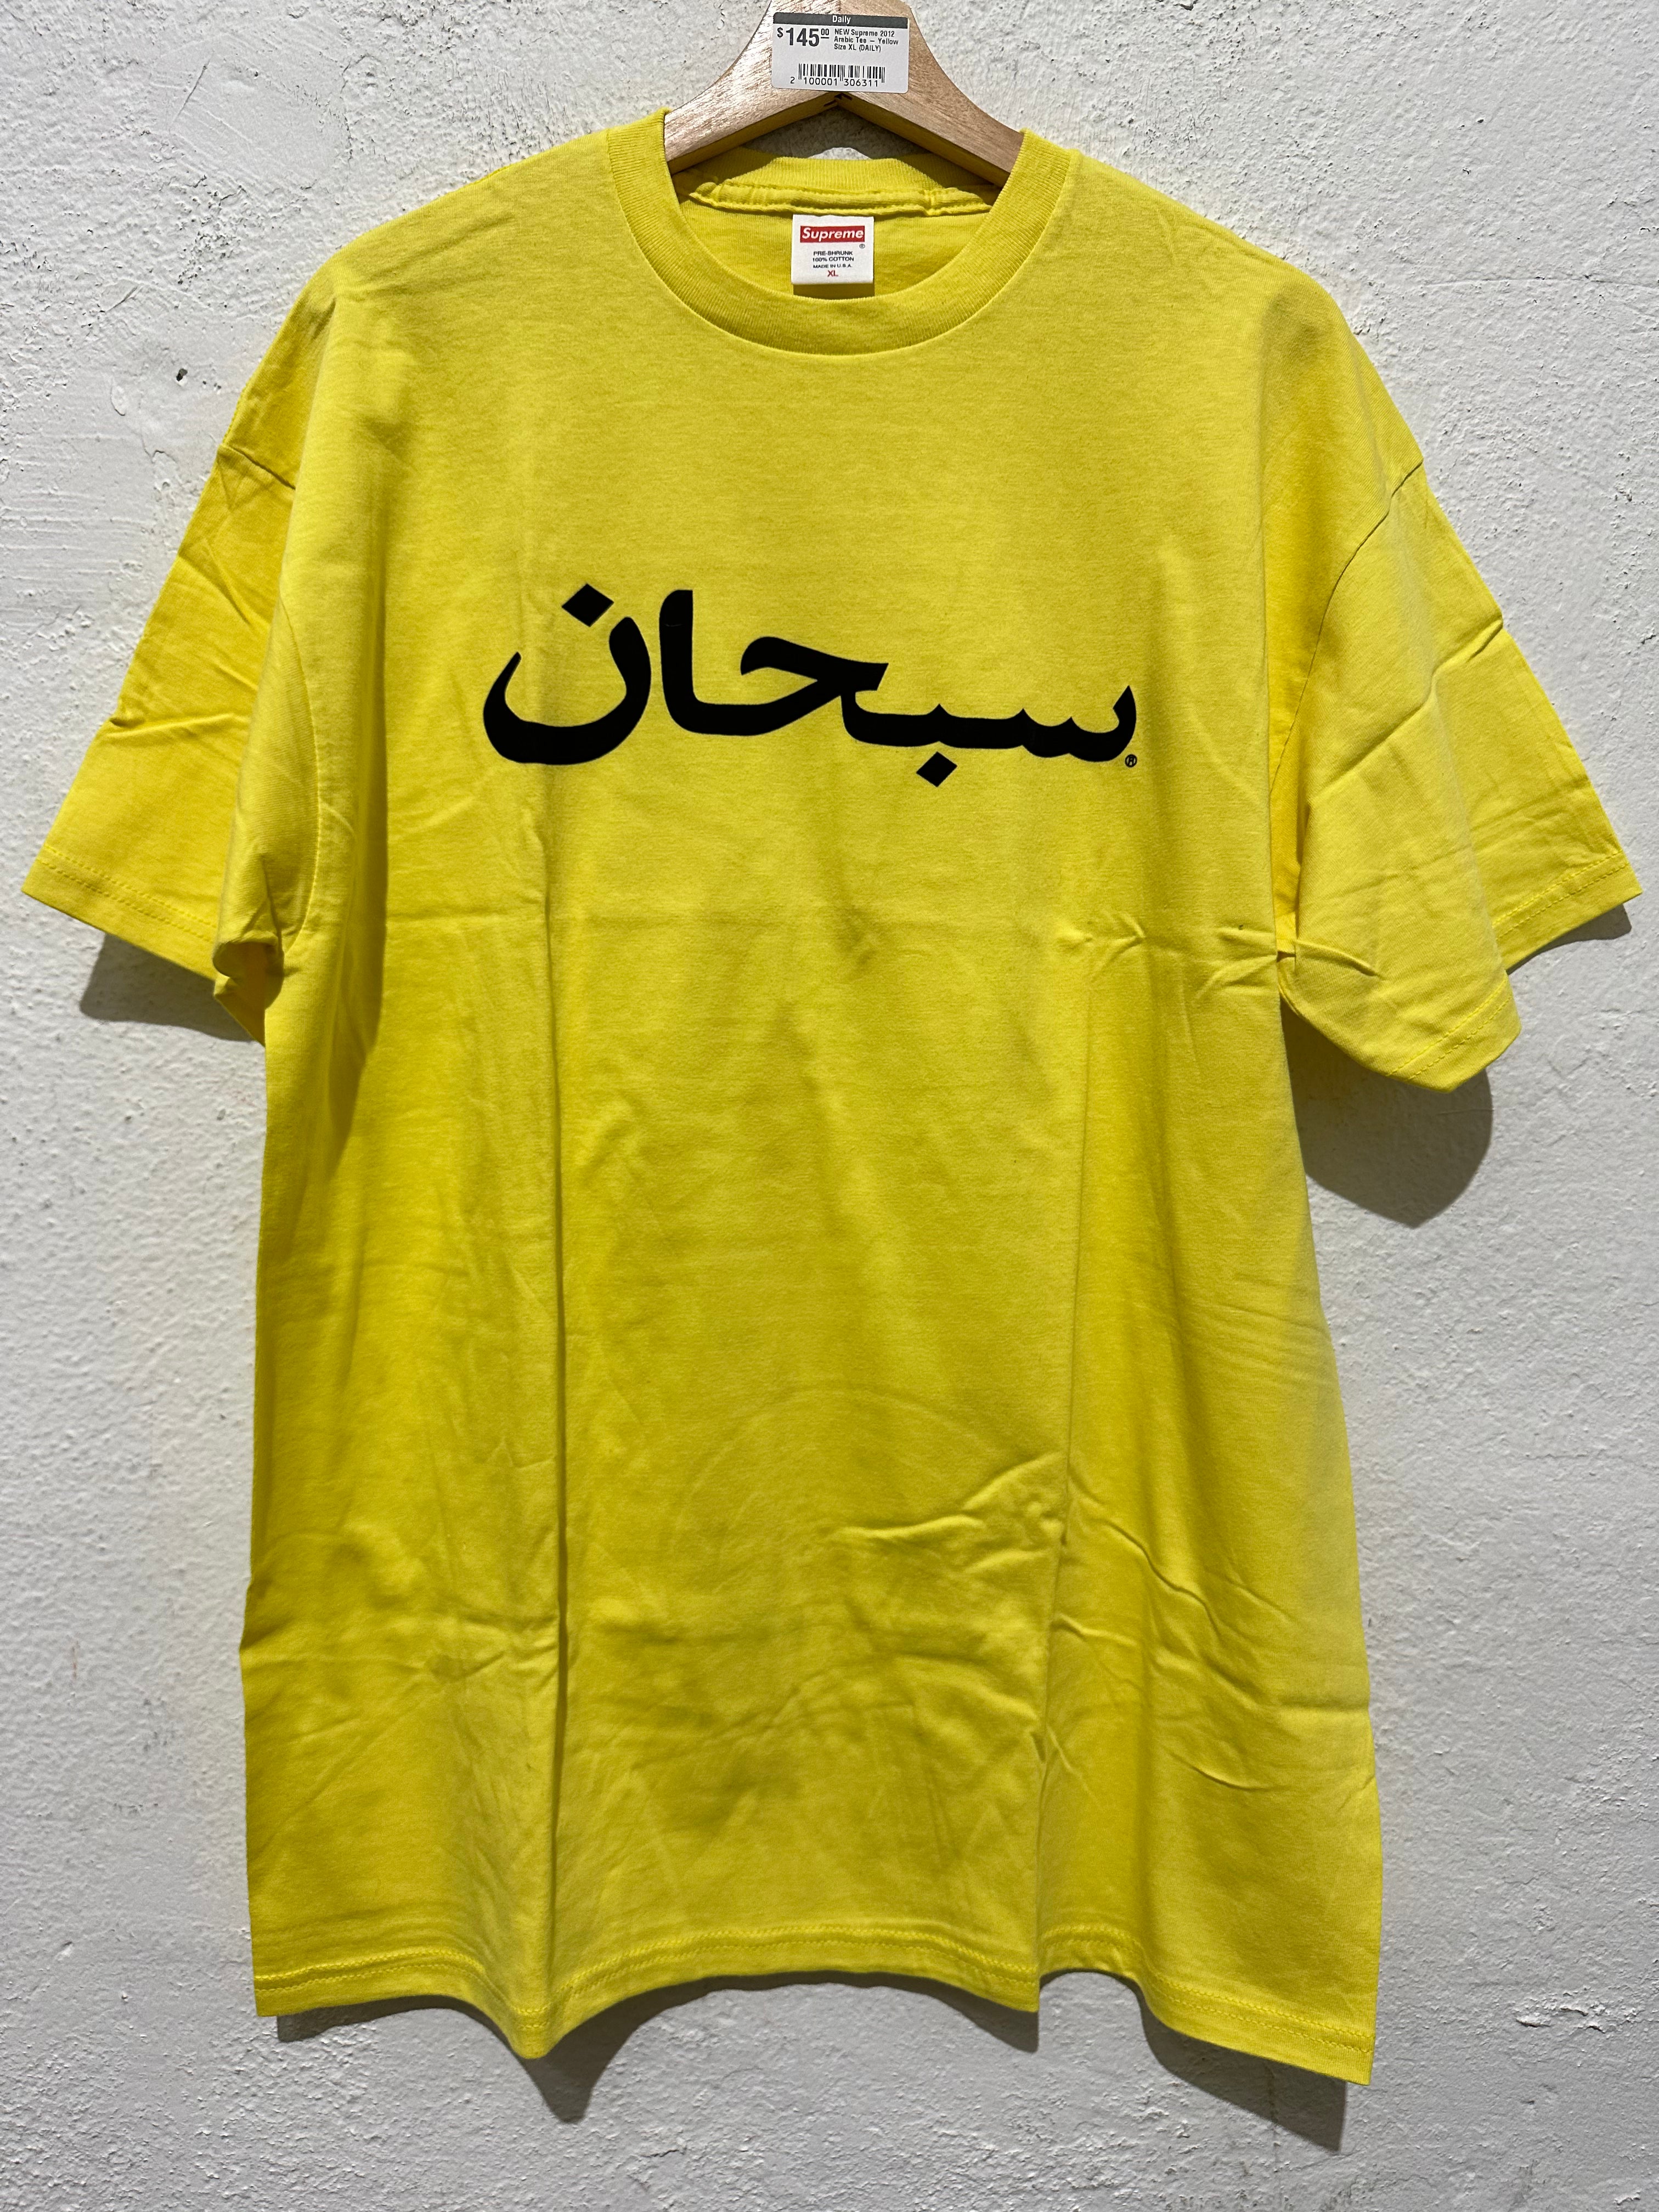 NEW Supreme 2012 Arabic Tee - Yellow Size XL